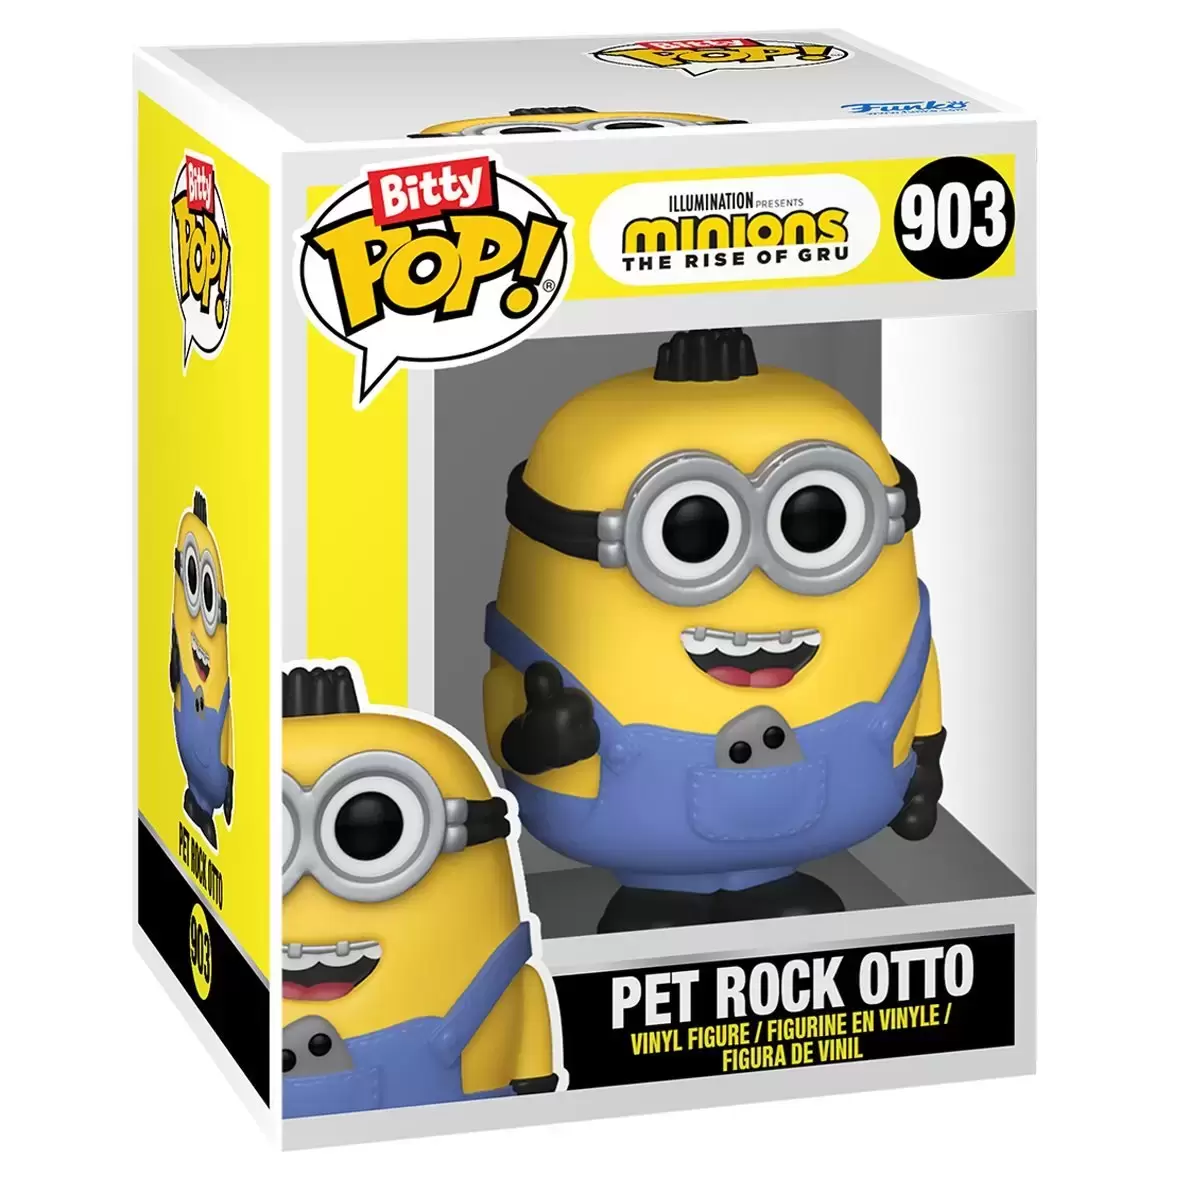 Bitty POP! - Minions Rise of Gru - Pet Rock Otto